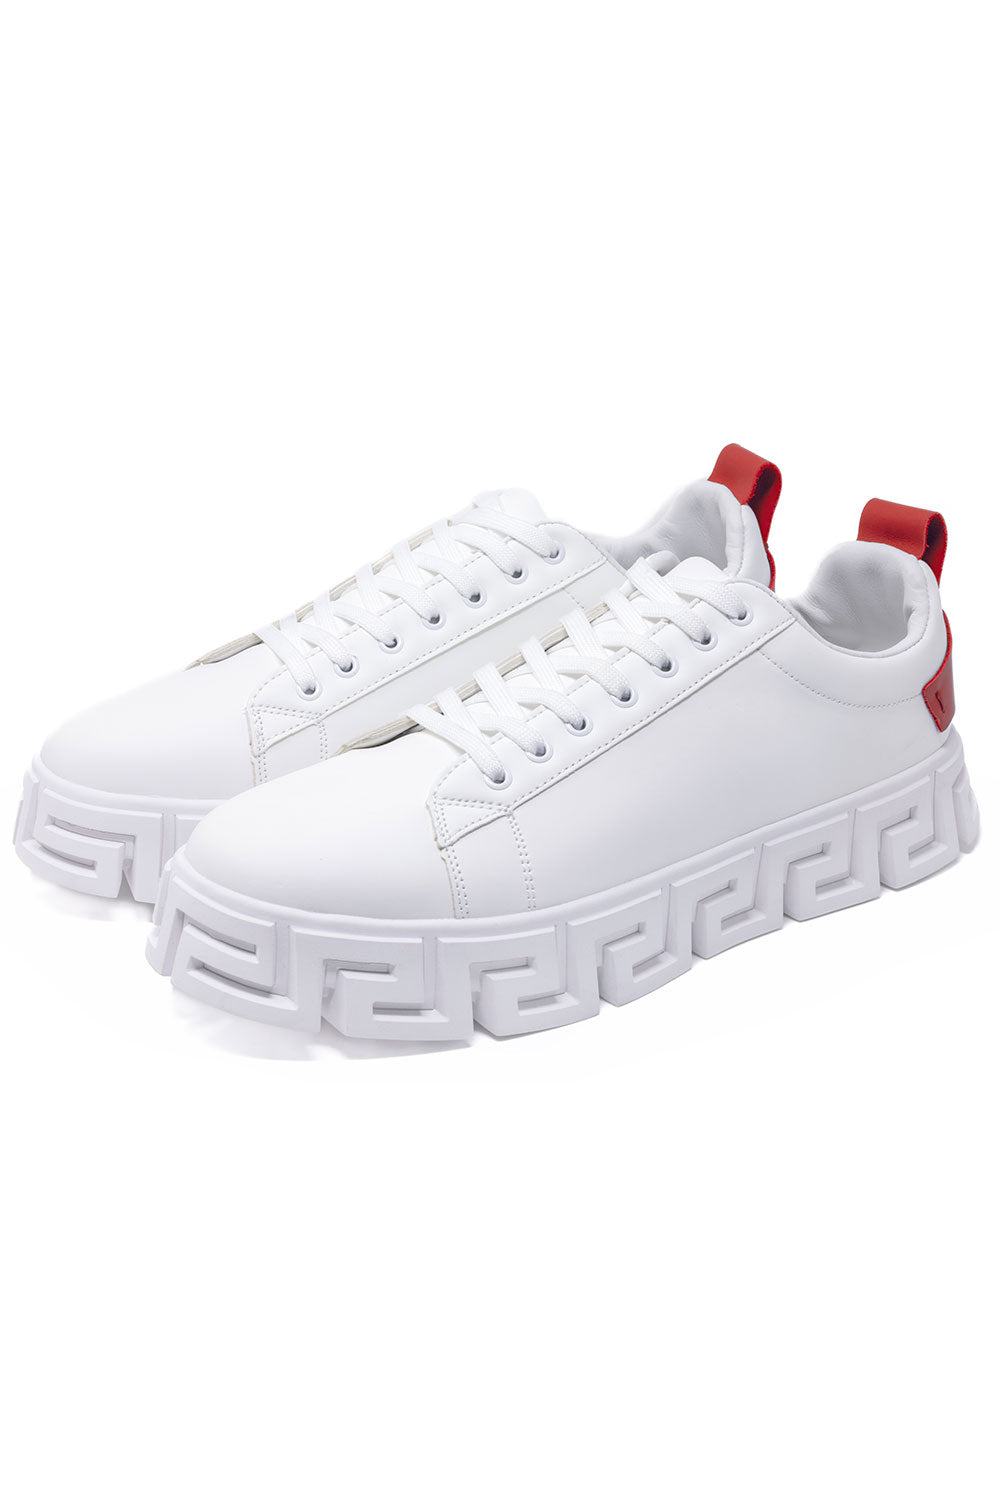 Barabas Men's Wholesale  Greek Key Sole Pattern Premium Sneakers 4SK06 White Red